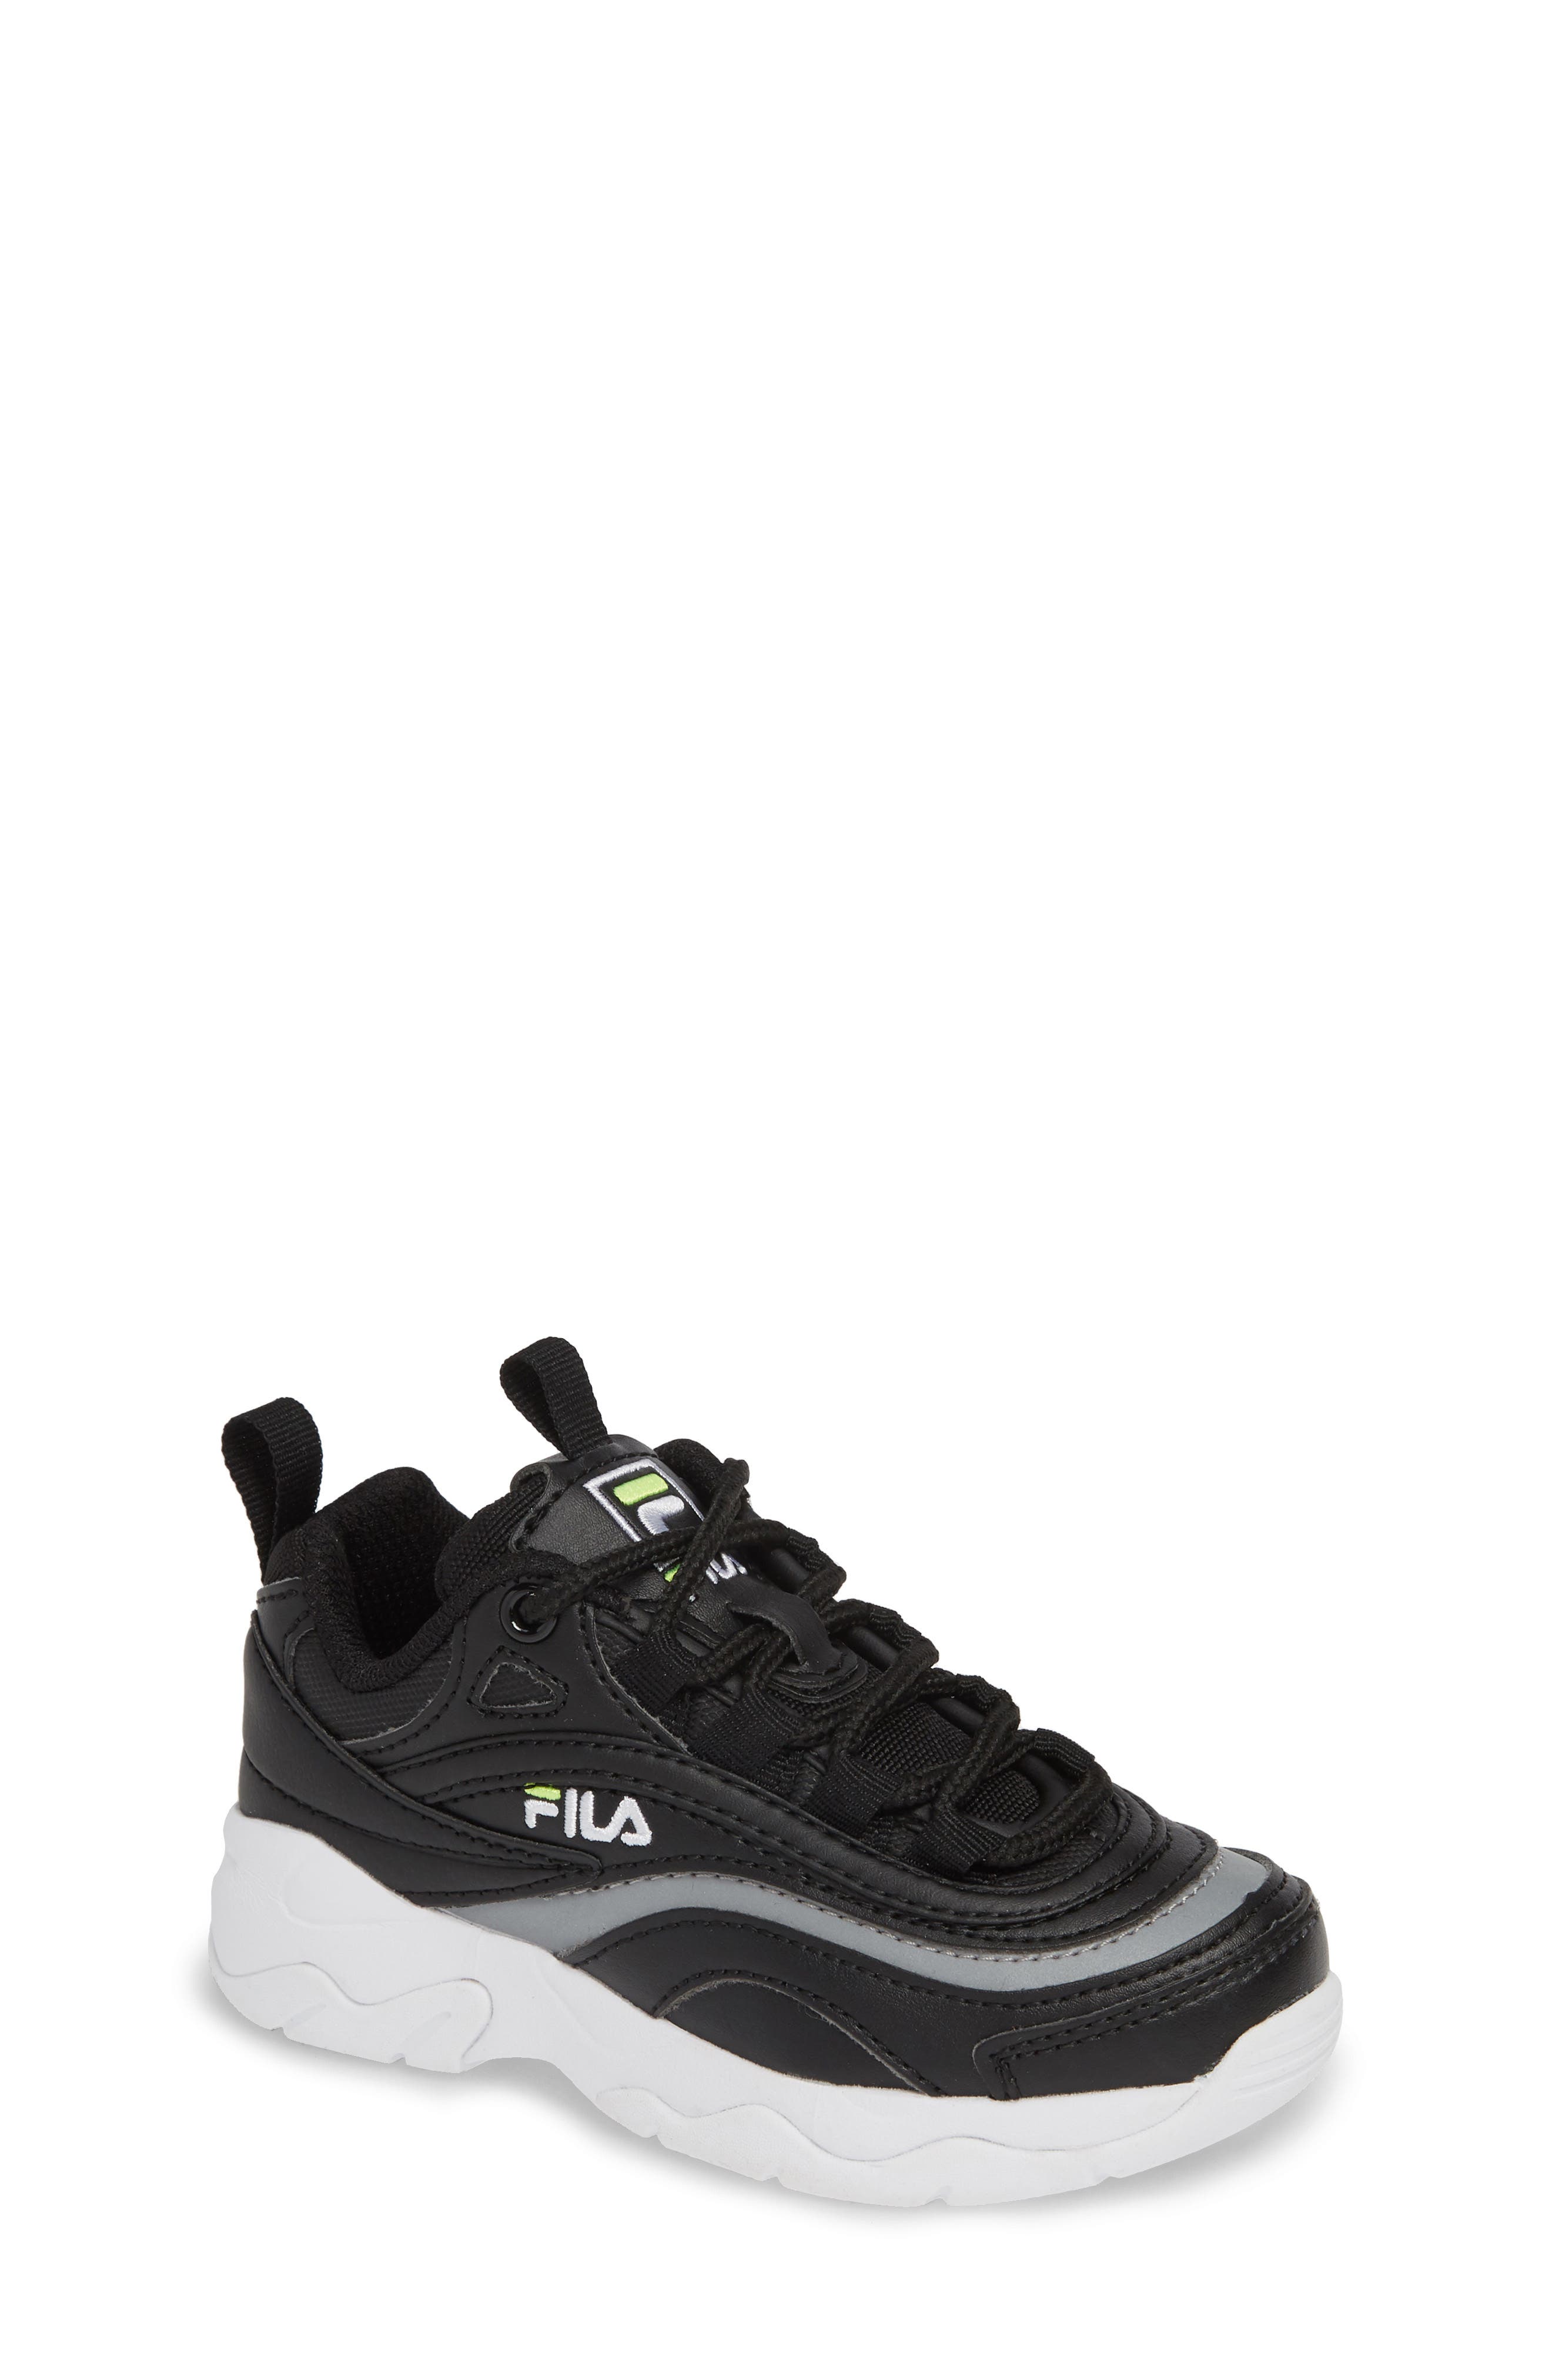 fila shoes size 3